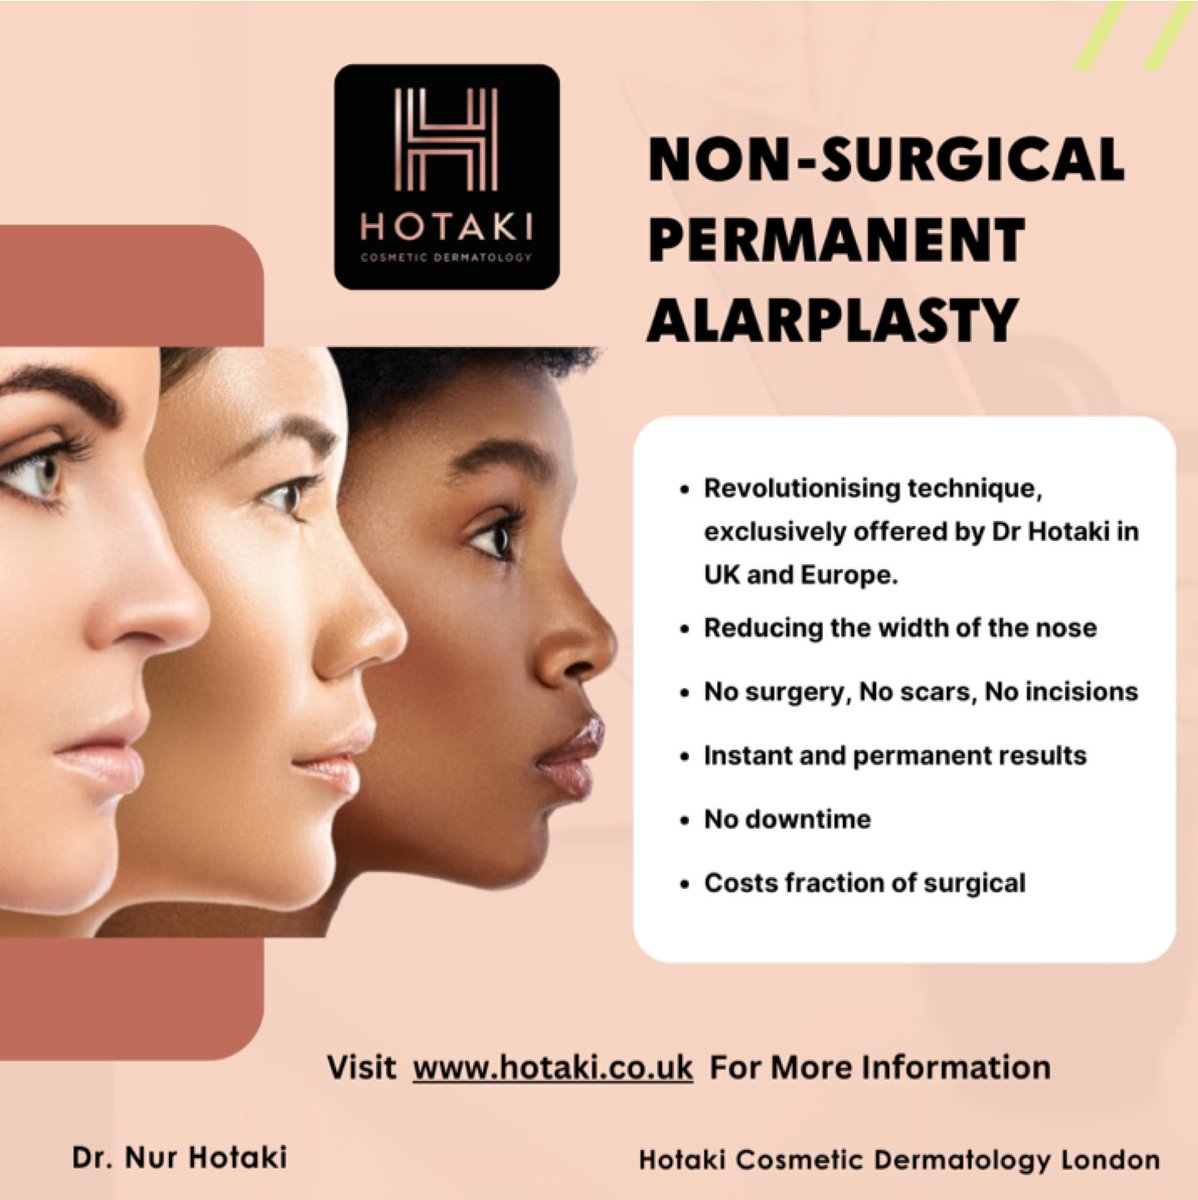 #drhotaki #hotakilondon #nonsurgicalaesthetics #aesthetictreatment #hotakicosmeticdermatology #noninvasive #nonsurgical #nonsurgicalpermanentalarplasty #nonsurgicalalarplasty #alarplasty